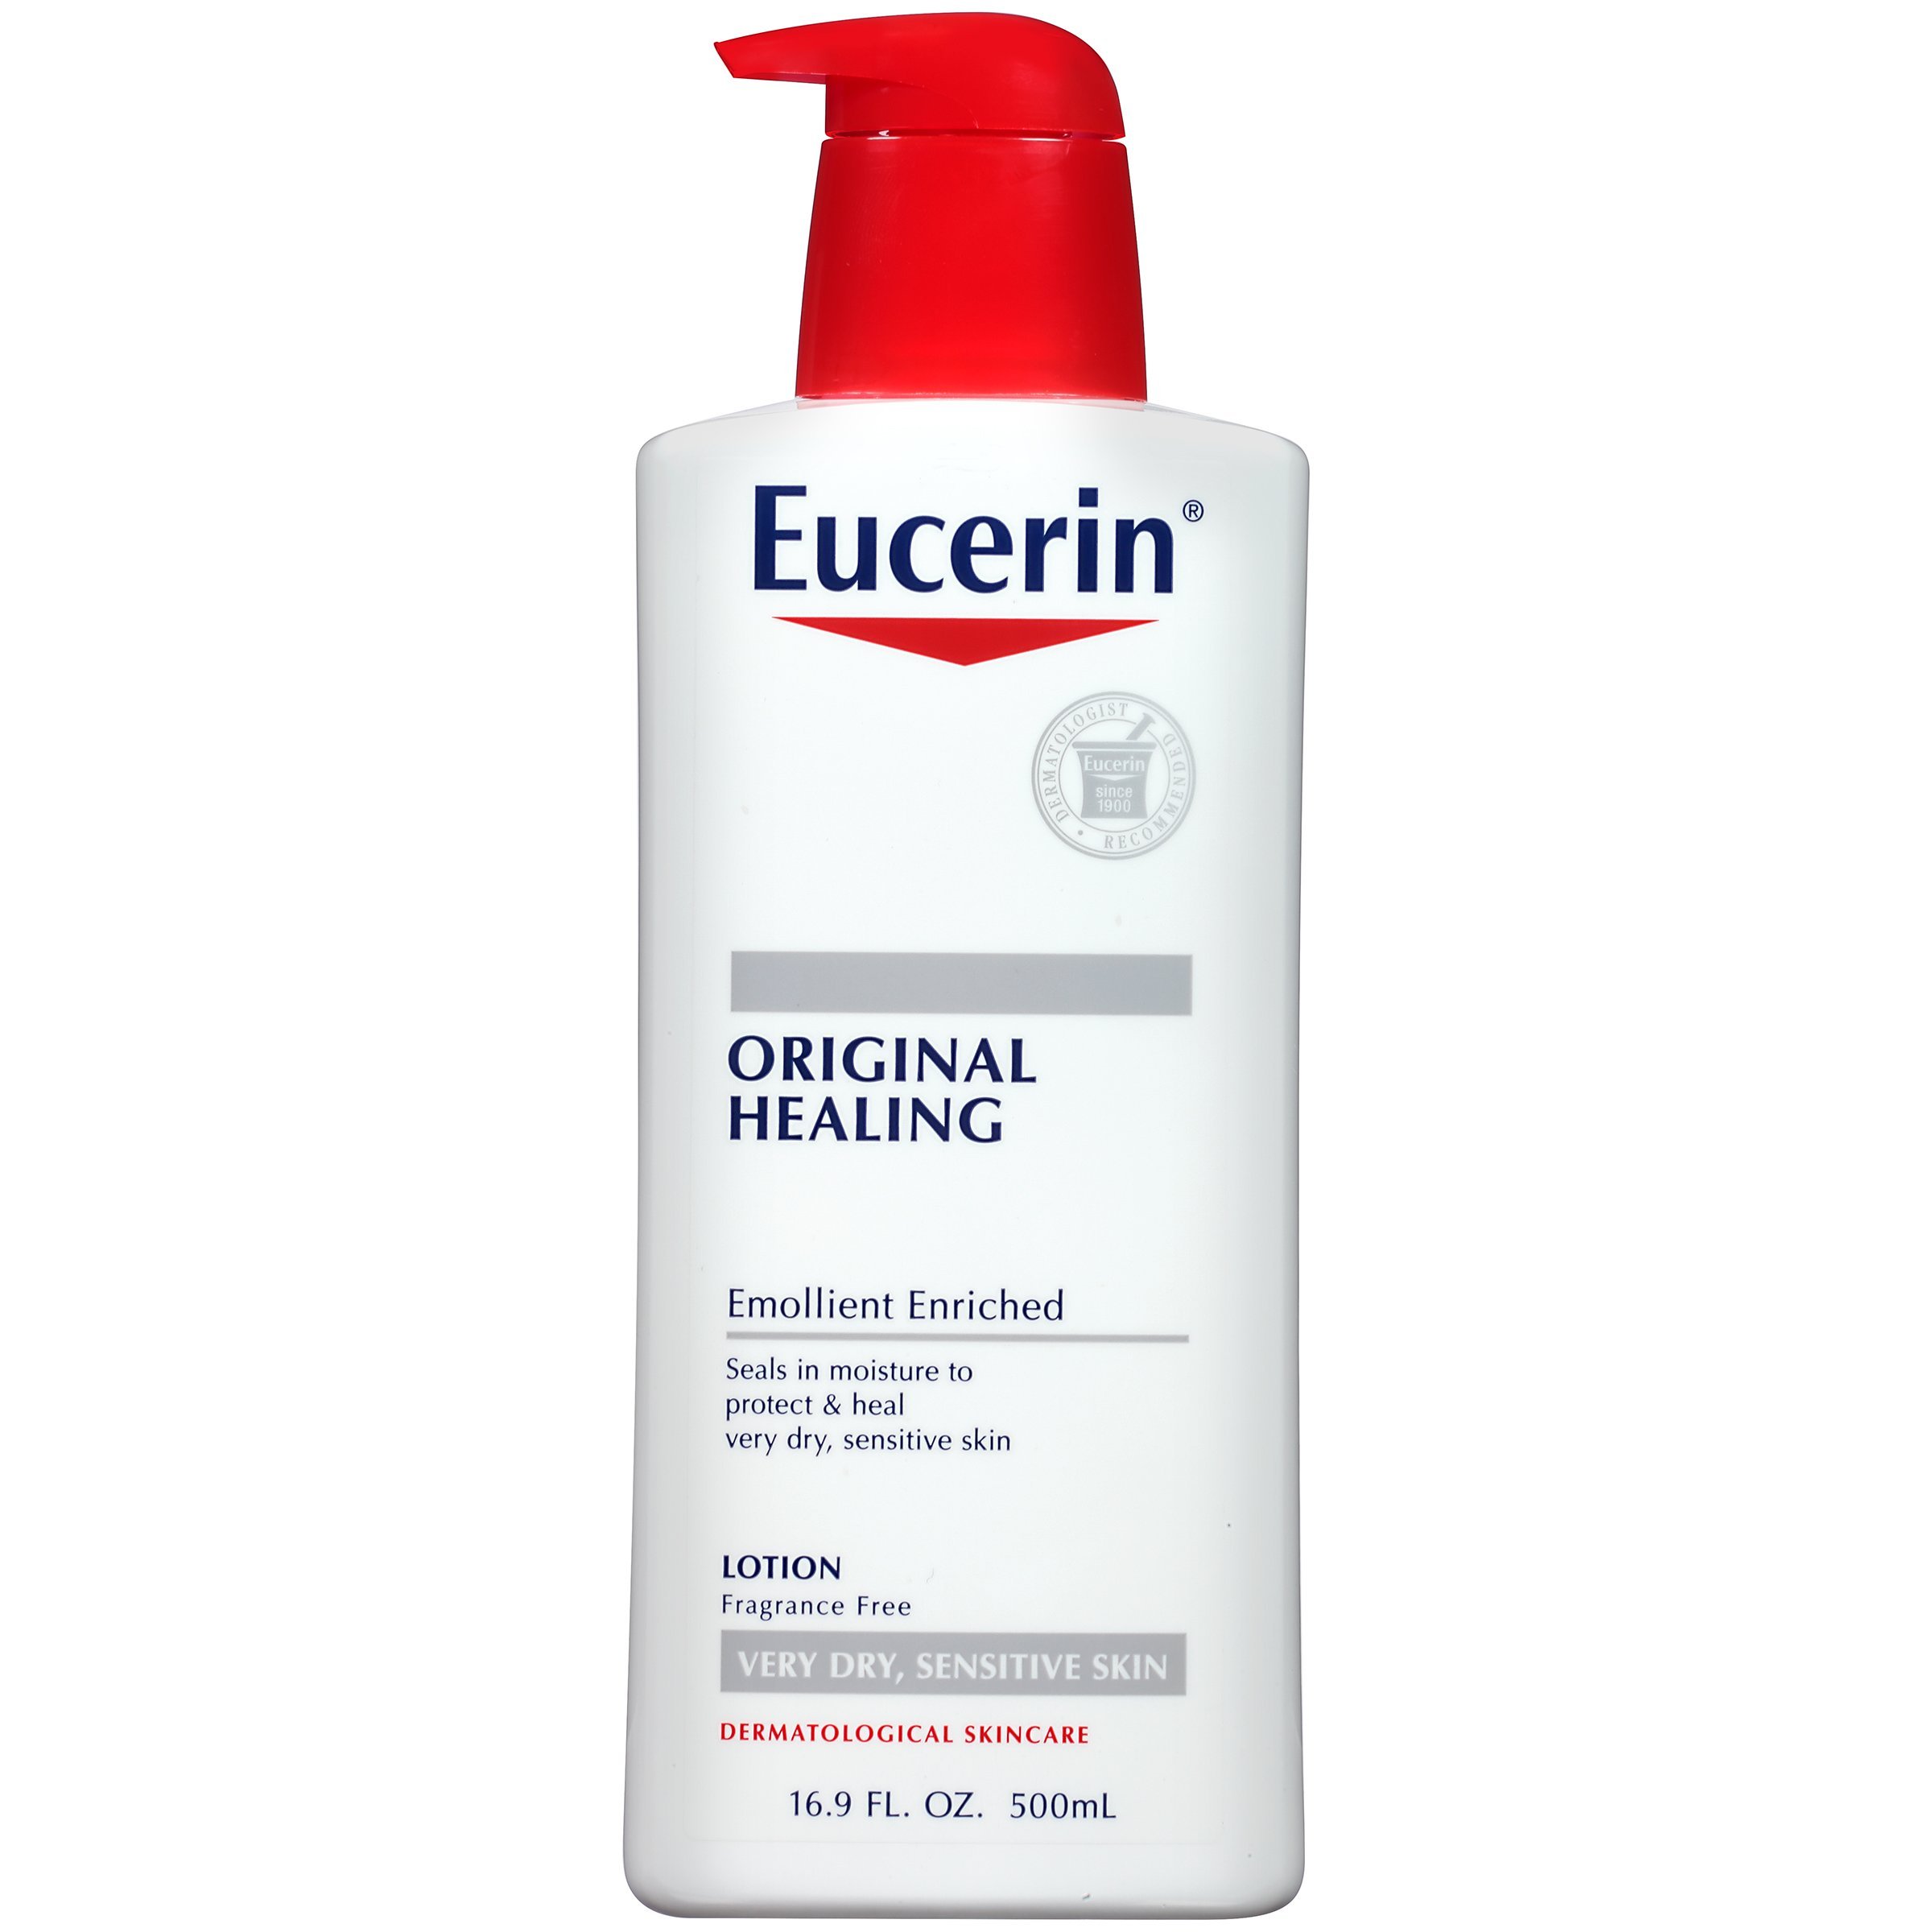 Eucerin Original Healing Rich Lotion Heal Very Dry Skin Eczema 16.9 Fl ...